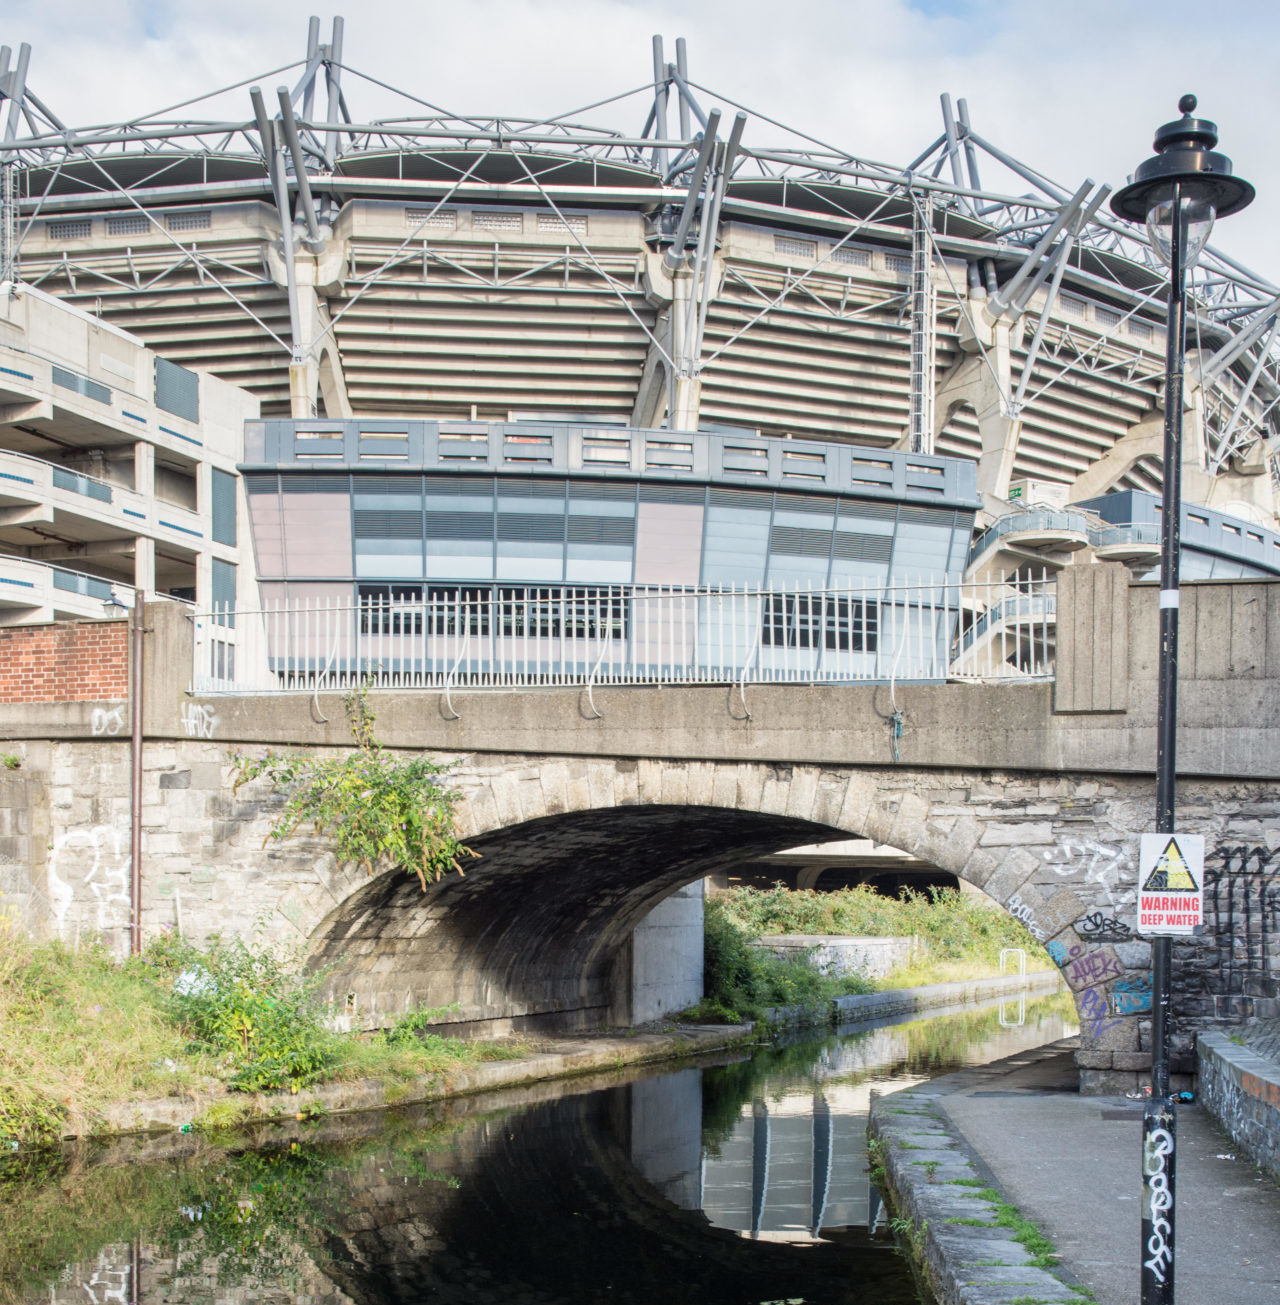 P19DKC Dublin, Ireland - September 17, 2016: Croke Park stadium stands above the Royal Canal in Dublin's North Strand neighbourhood.